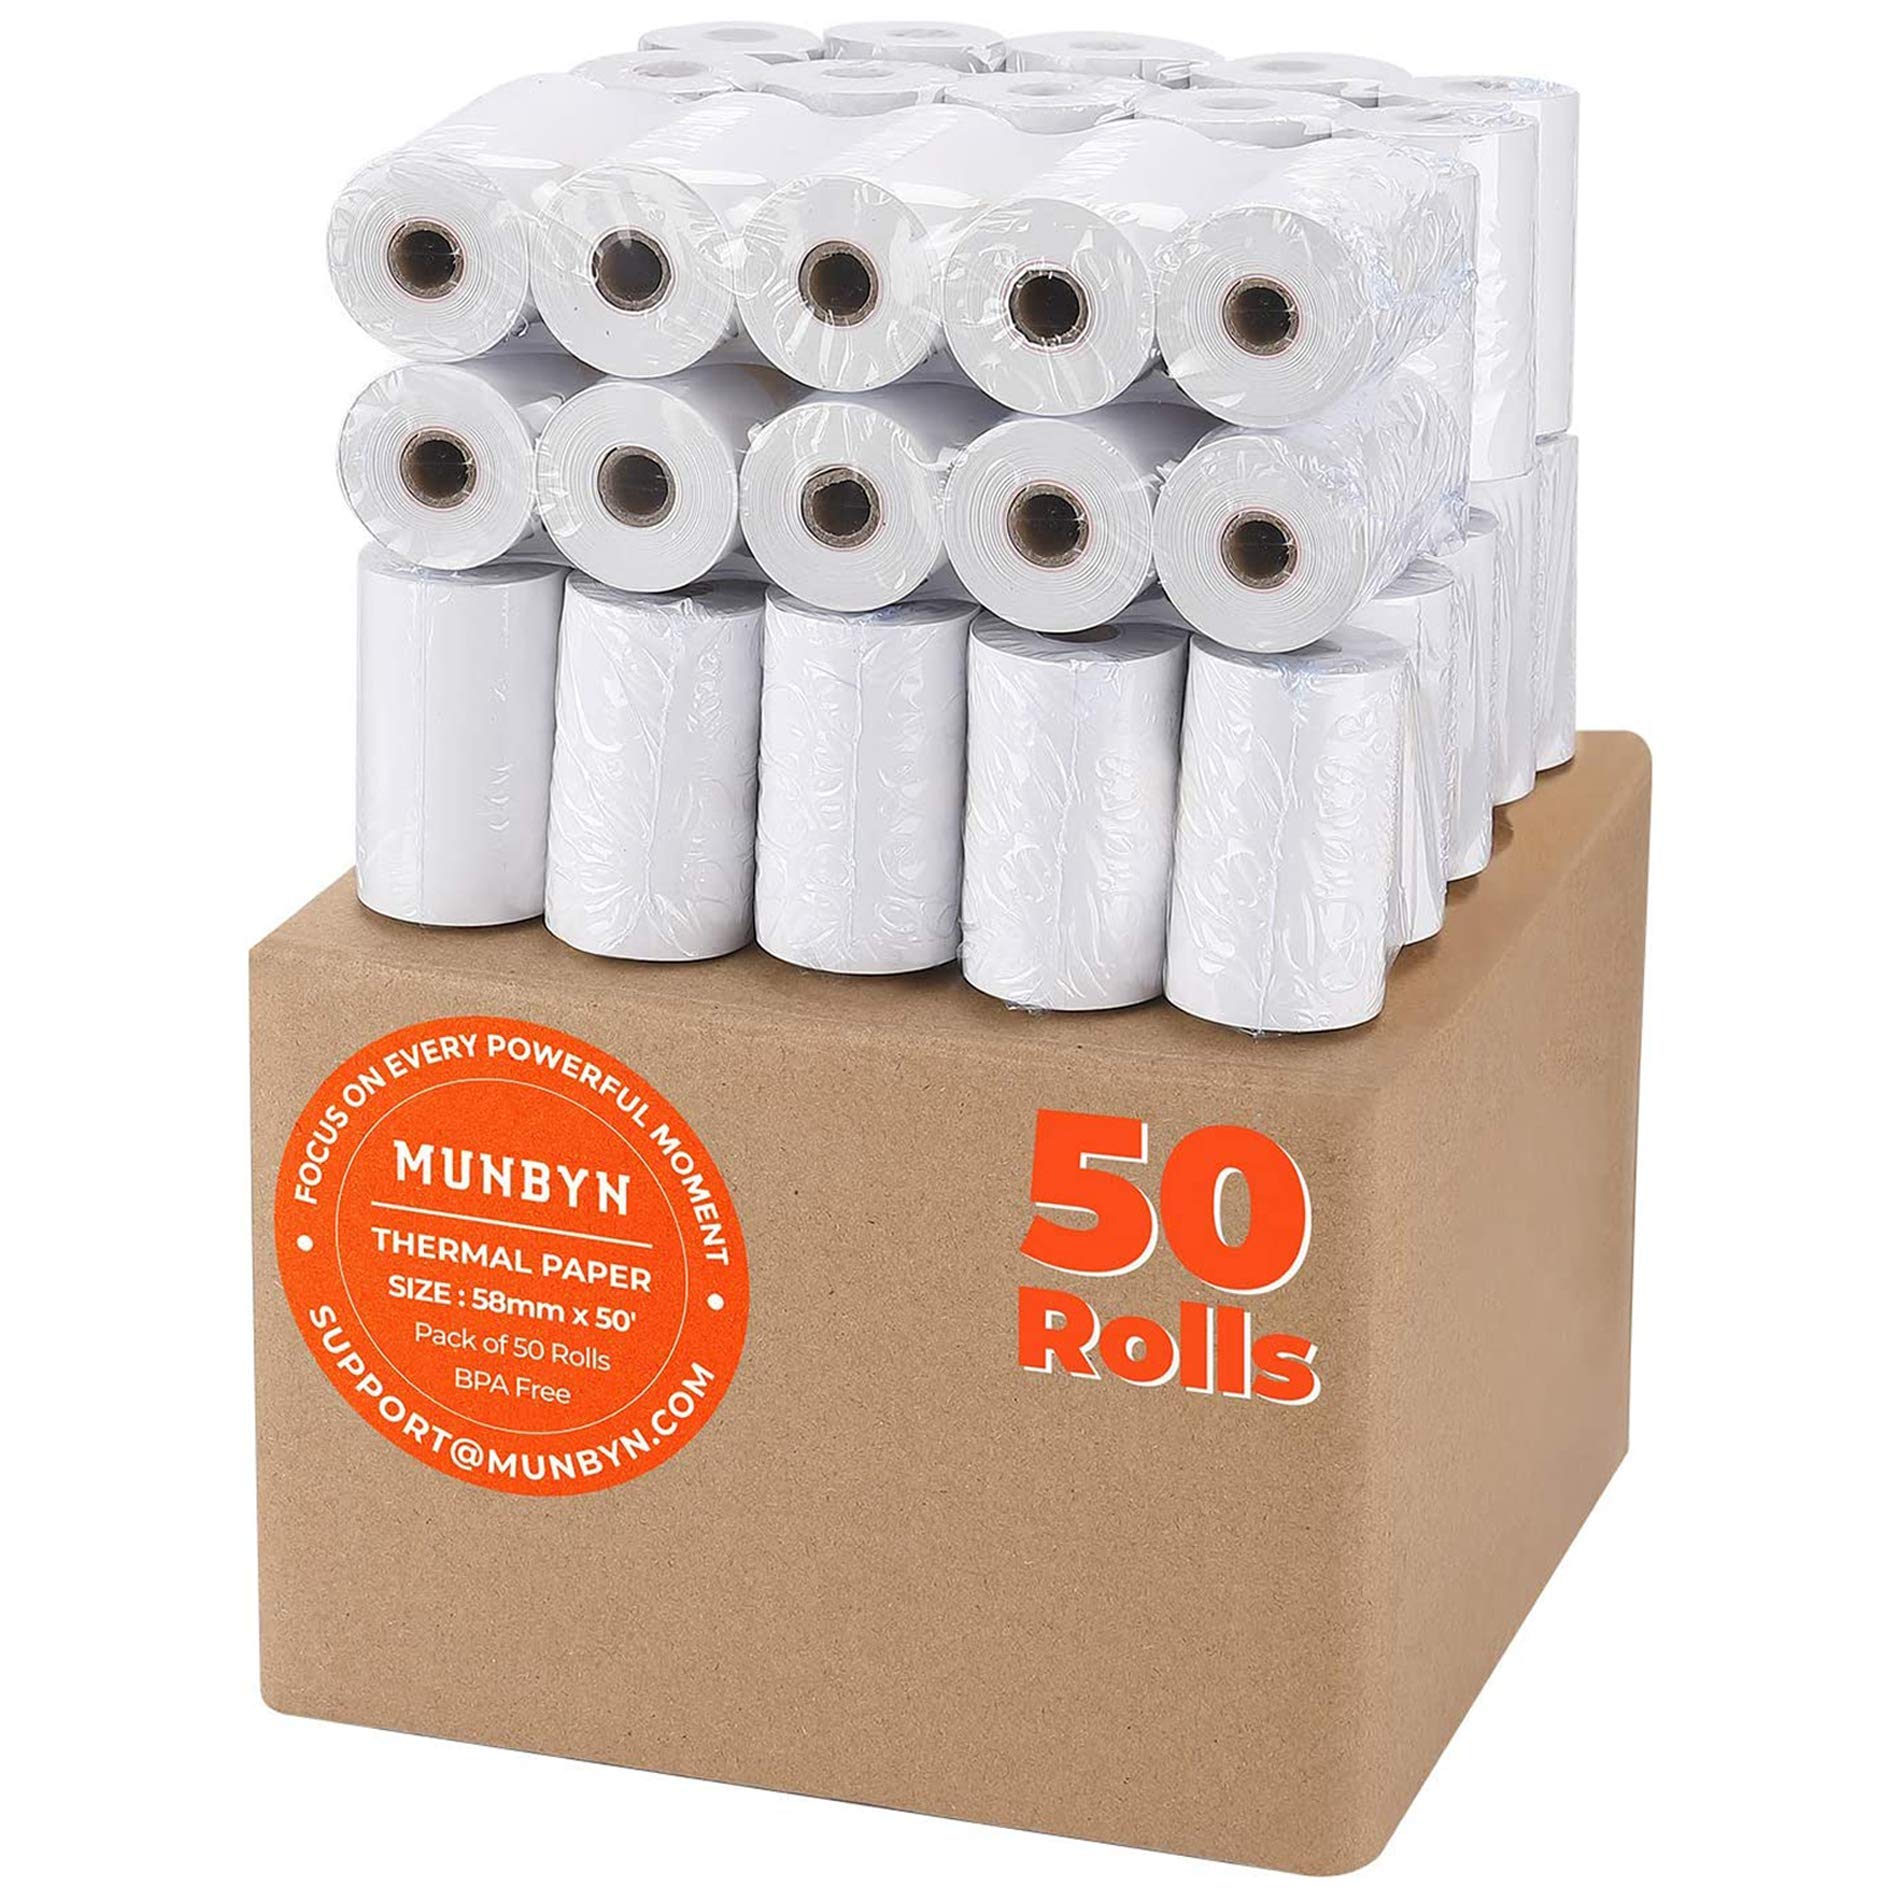 MUNBYN 2 1/4" x 50' Thermal Paper (50 Rolls), BPA Free Receipt Paper, 58mm Thermal Receipt Paper Fits All 58mm Mini Thermal POS 